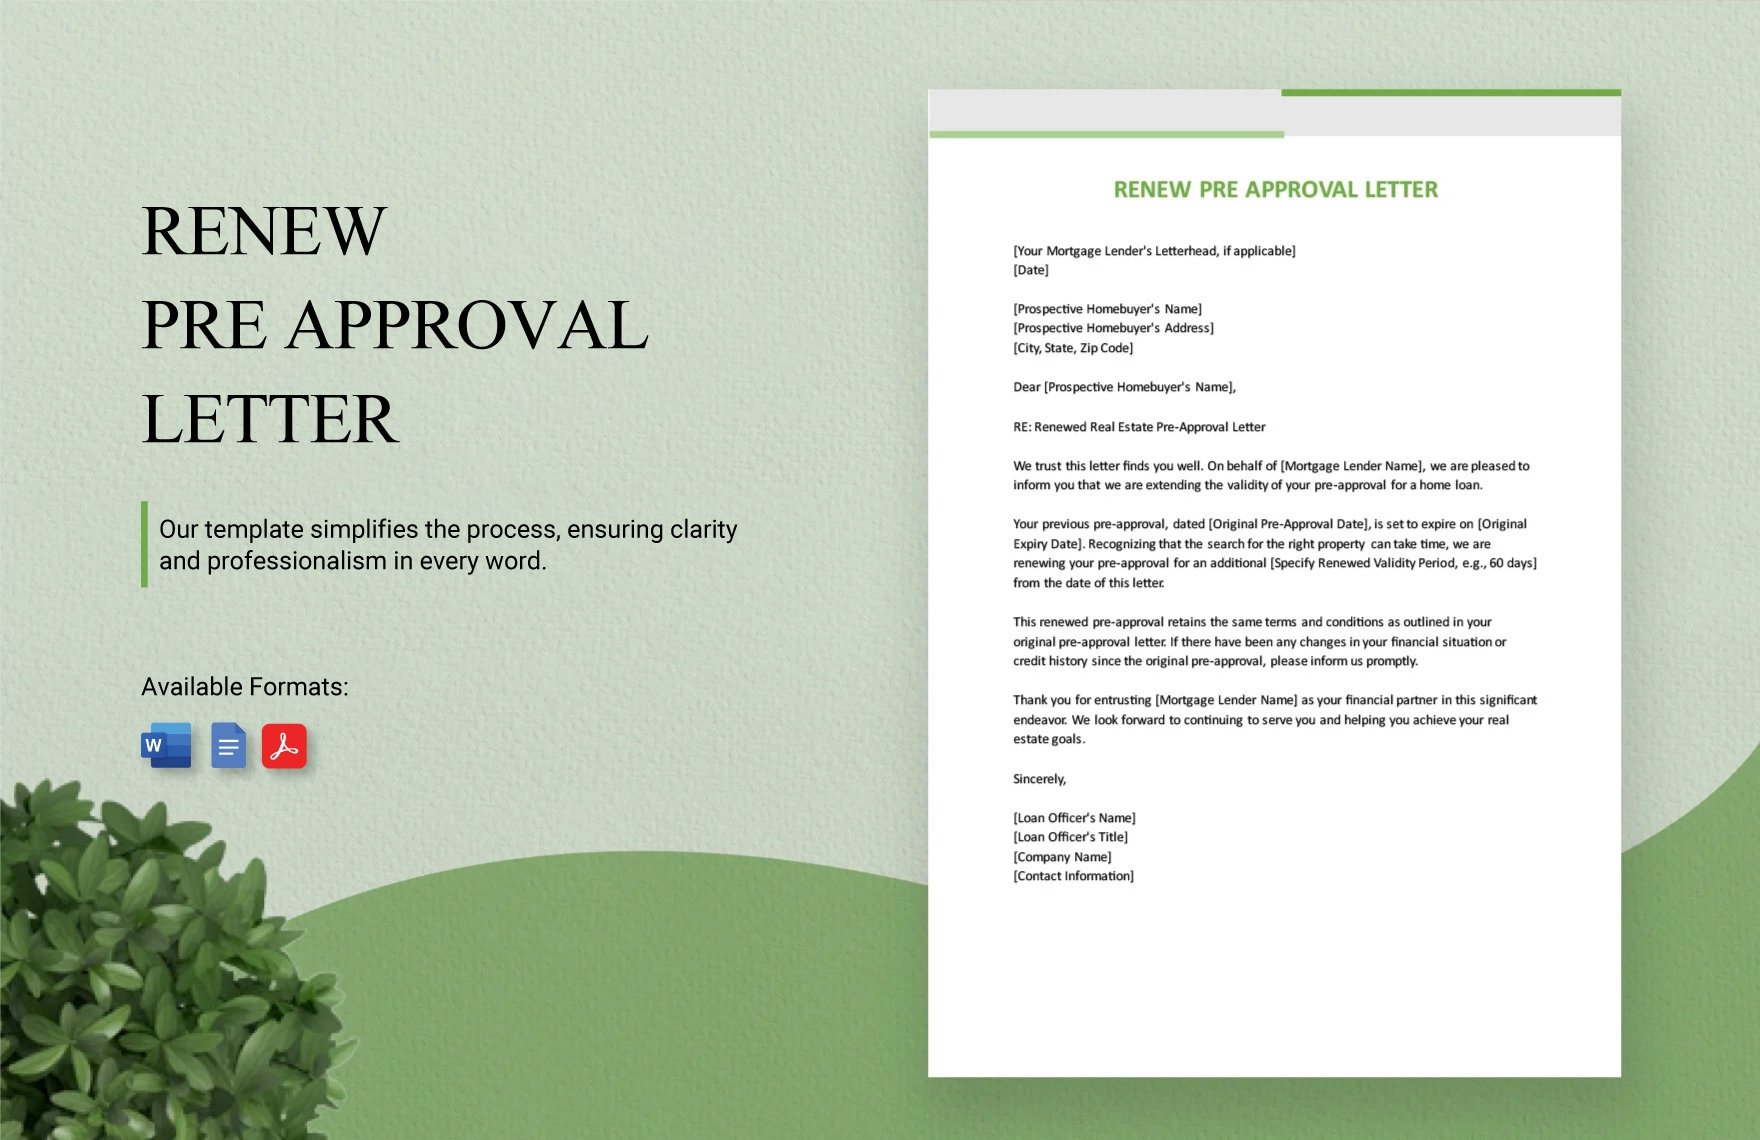 Renew Pre Approval Letter in Word, Google Docs, PDF